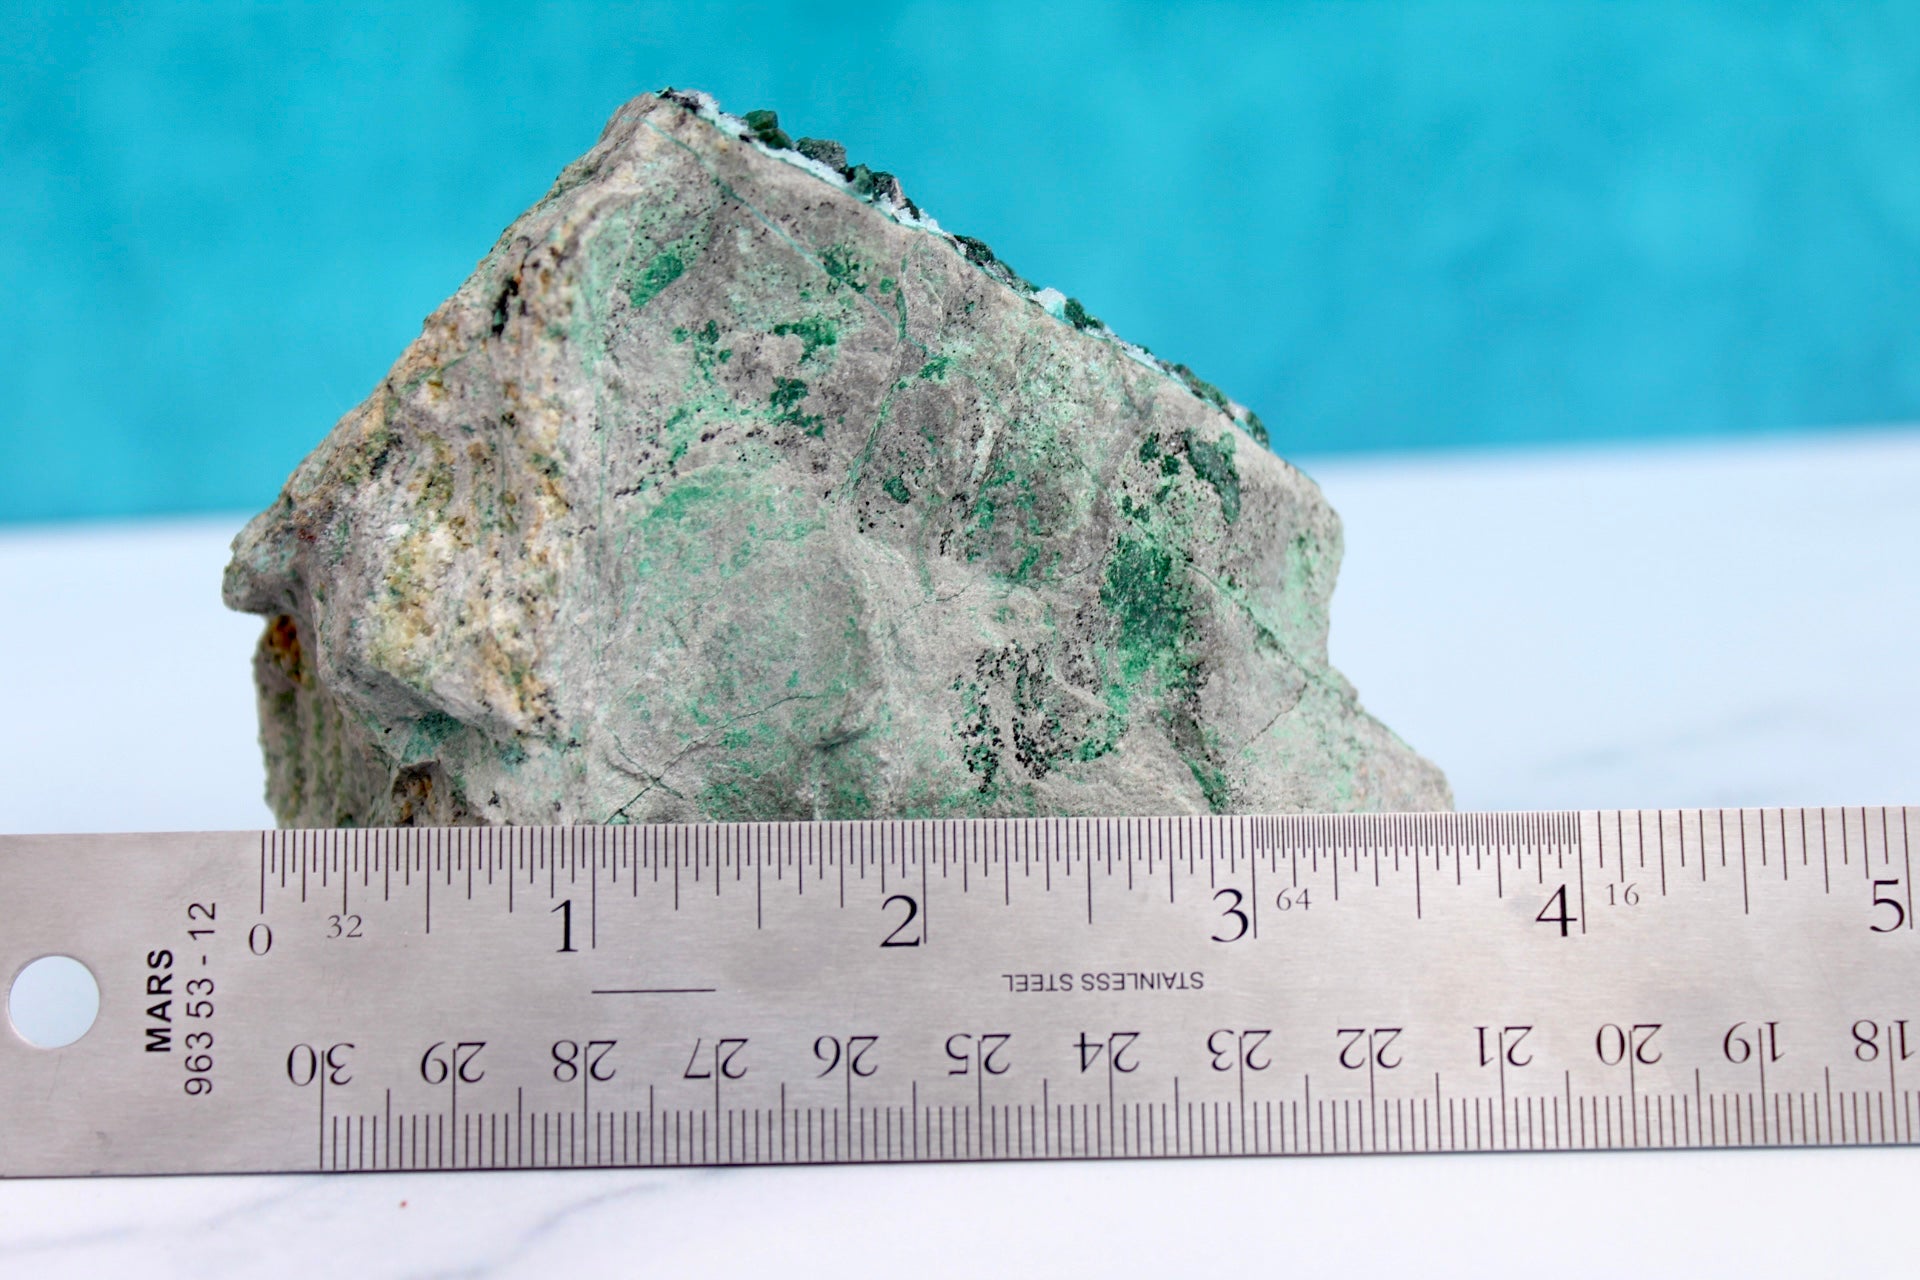 dimensions ruler size of rock chrysocolla malachite